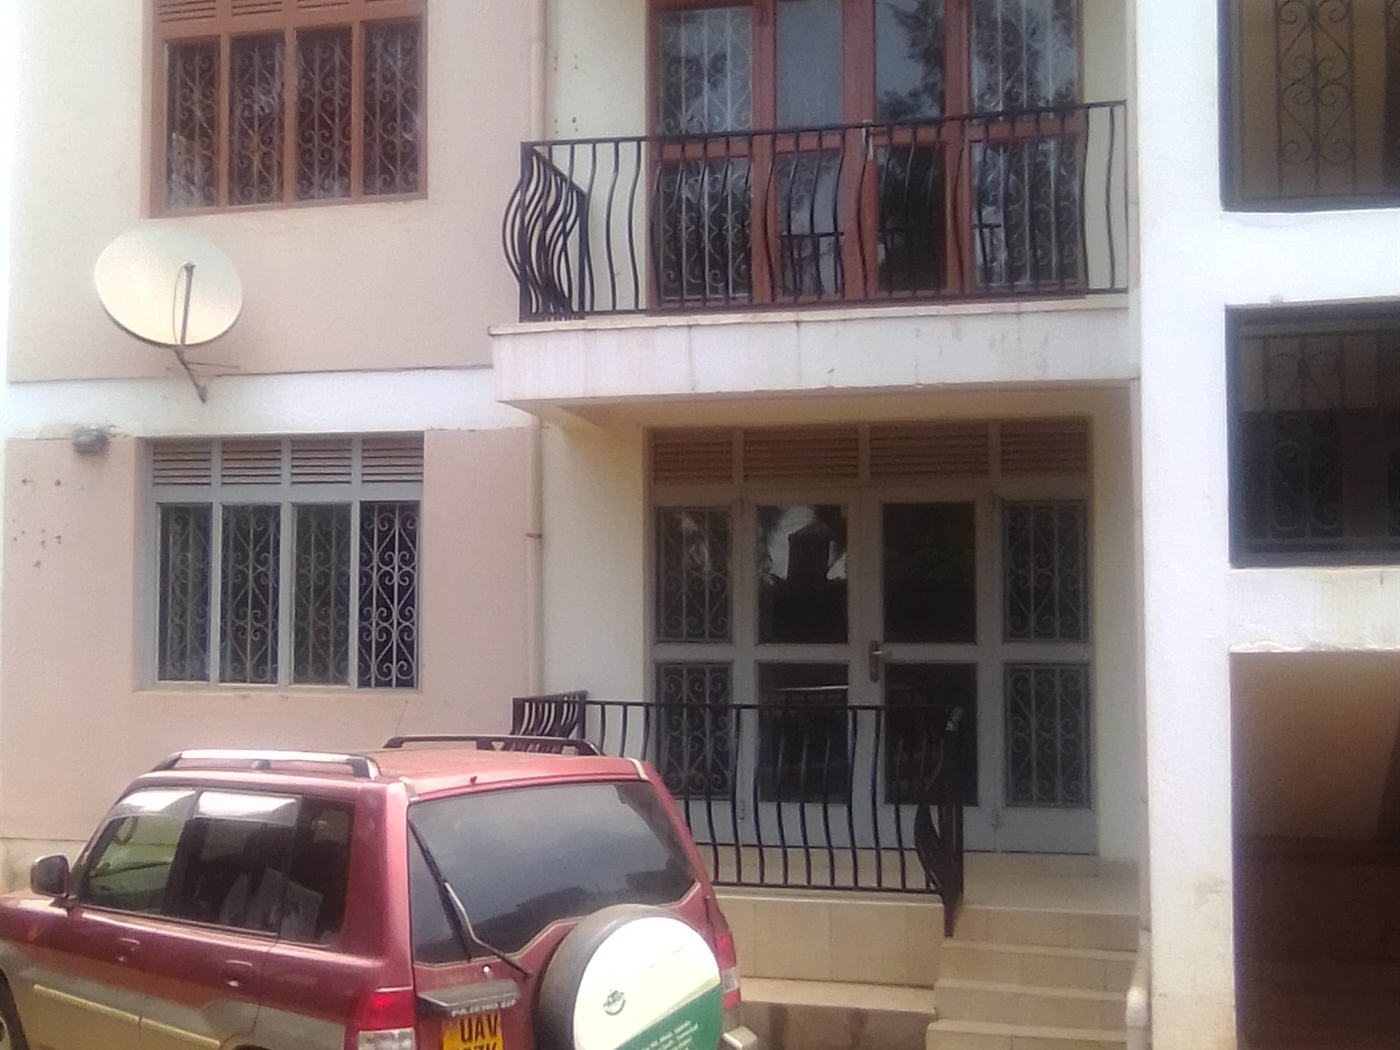 Apartment block for rent in Nkokonjeru Mbaale